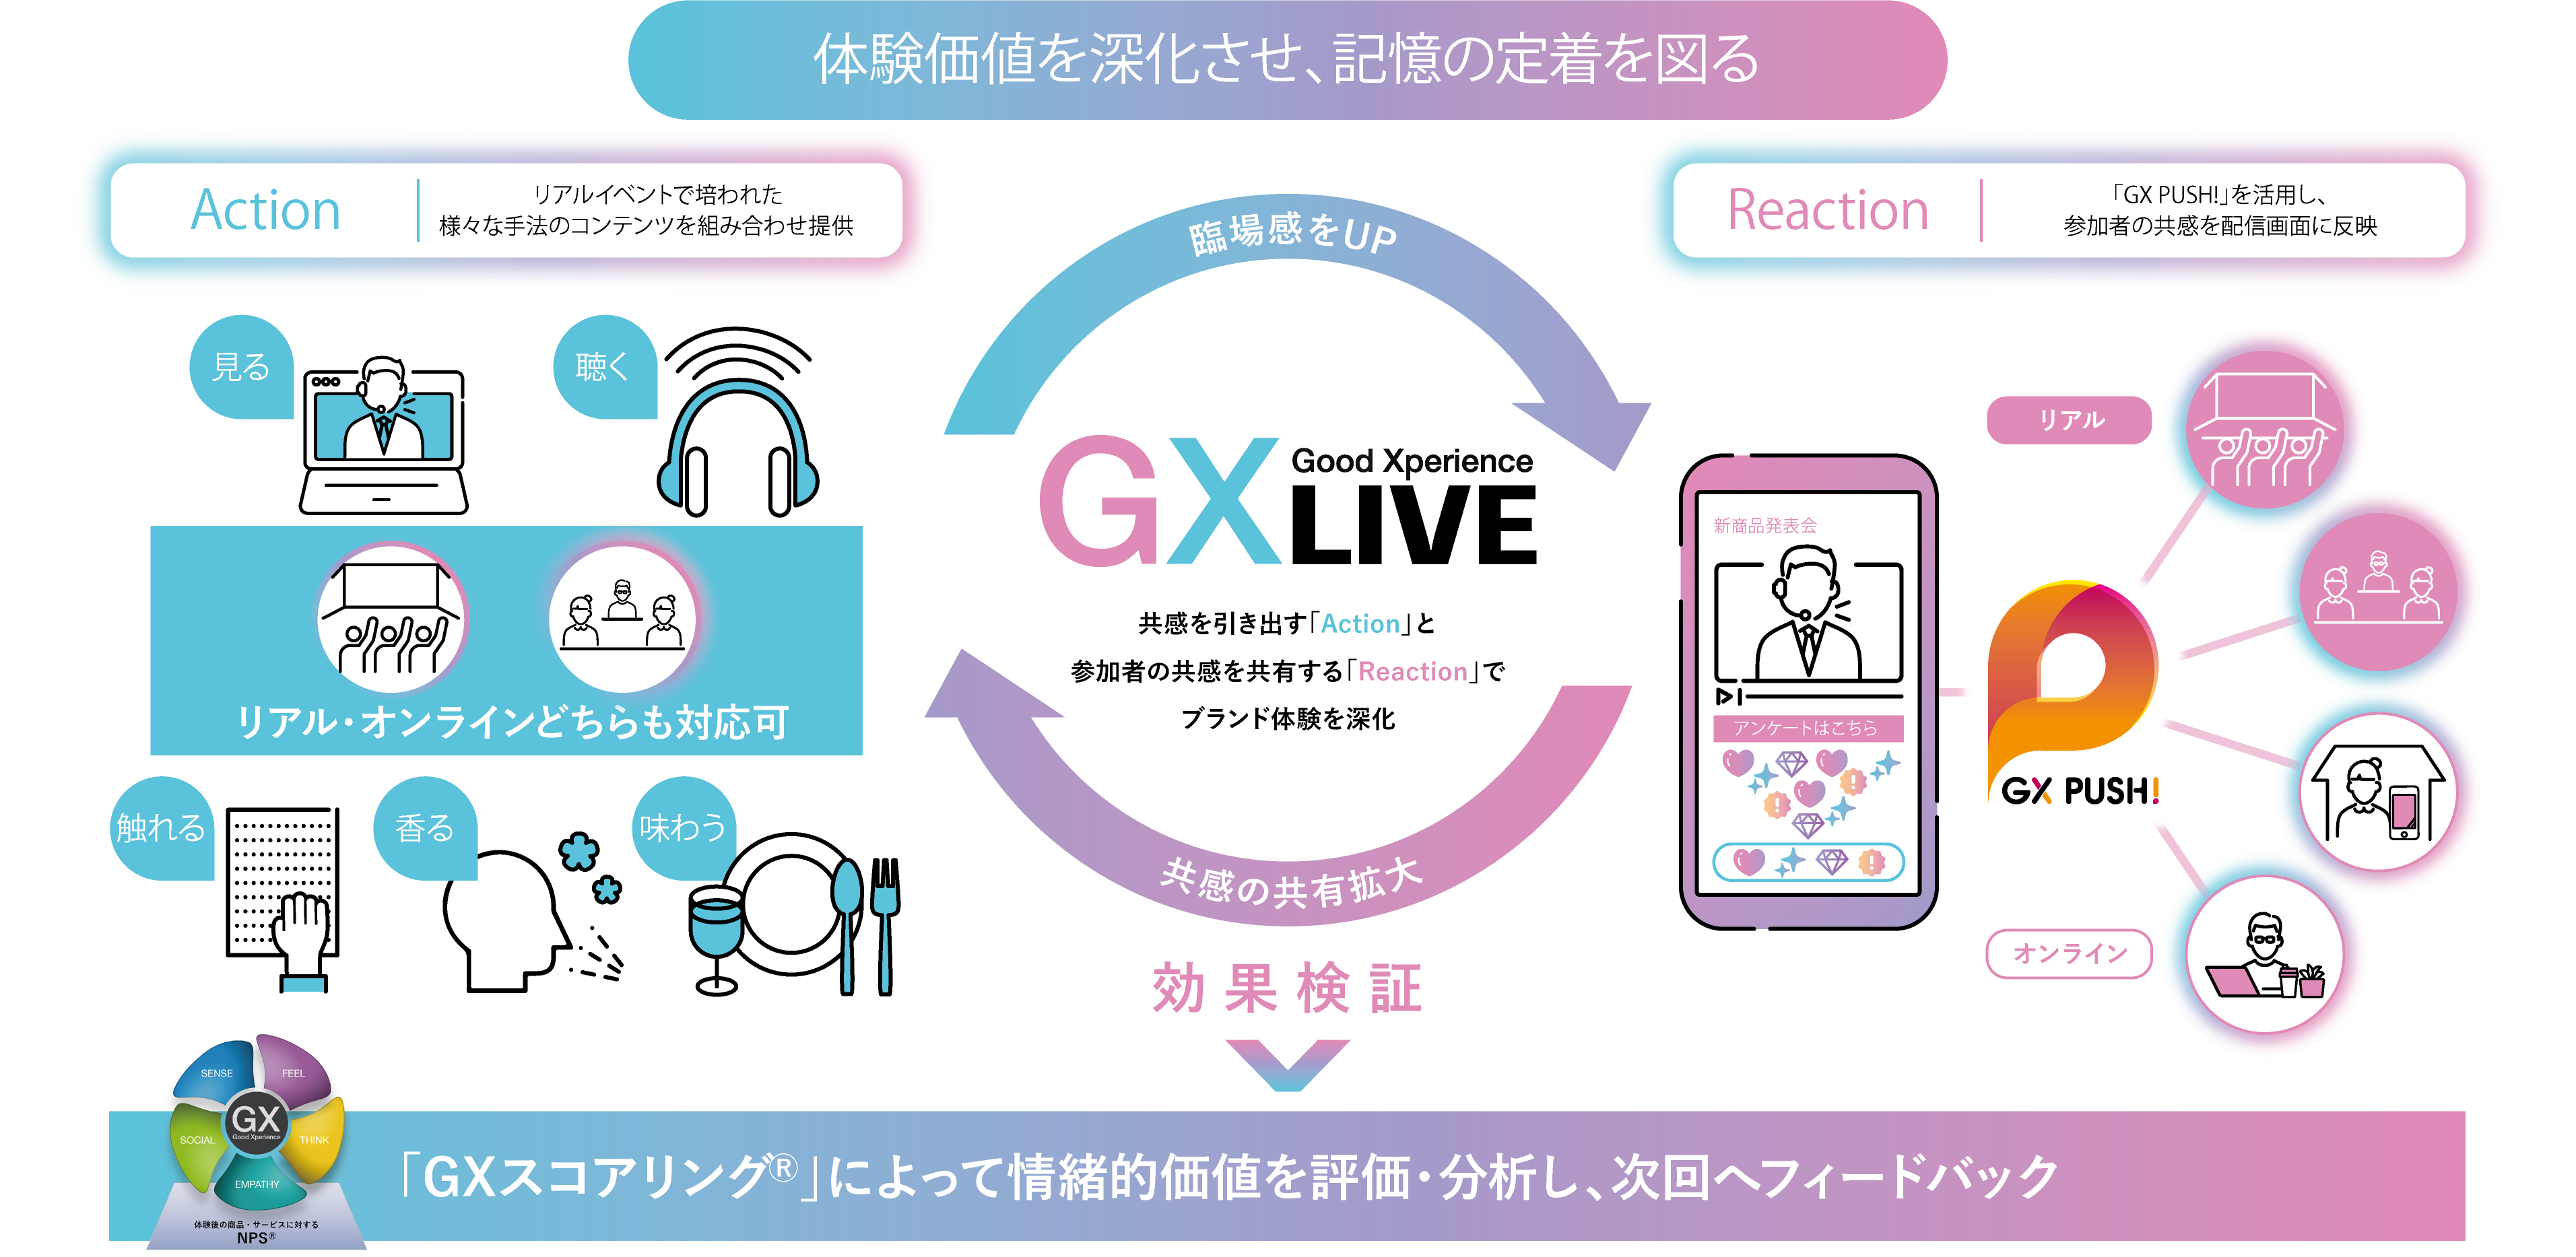 GX LIVE™概要図